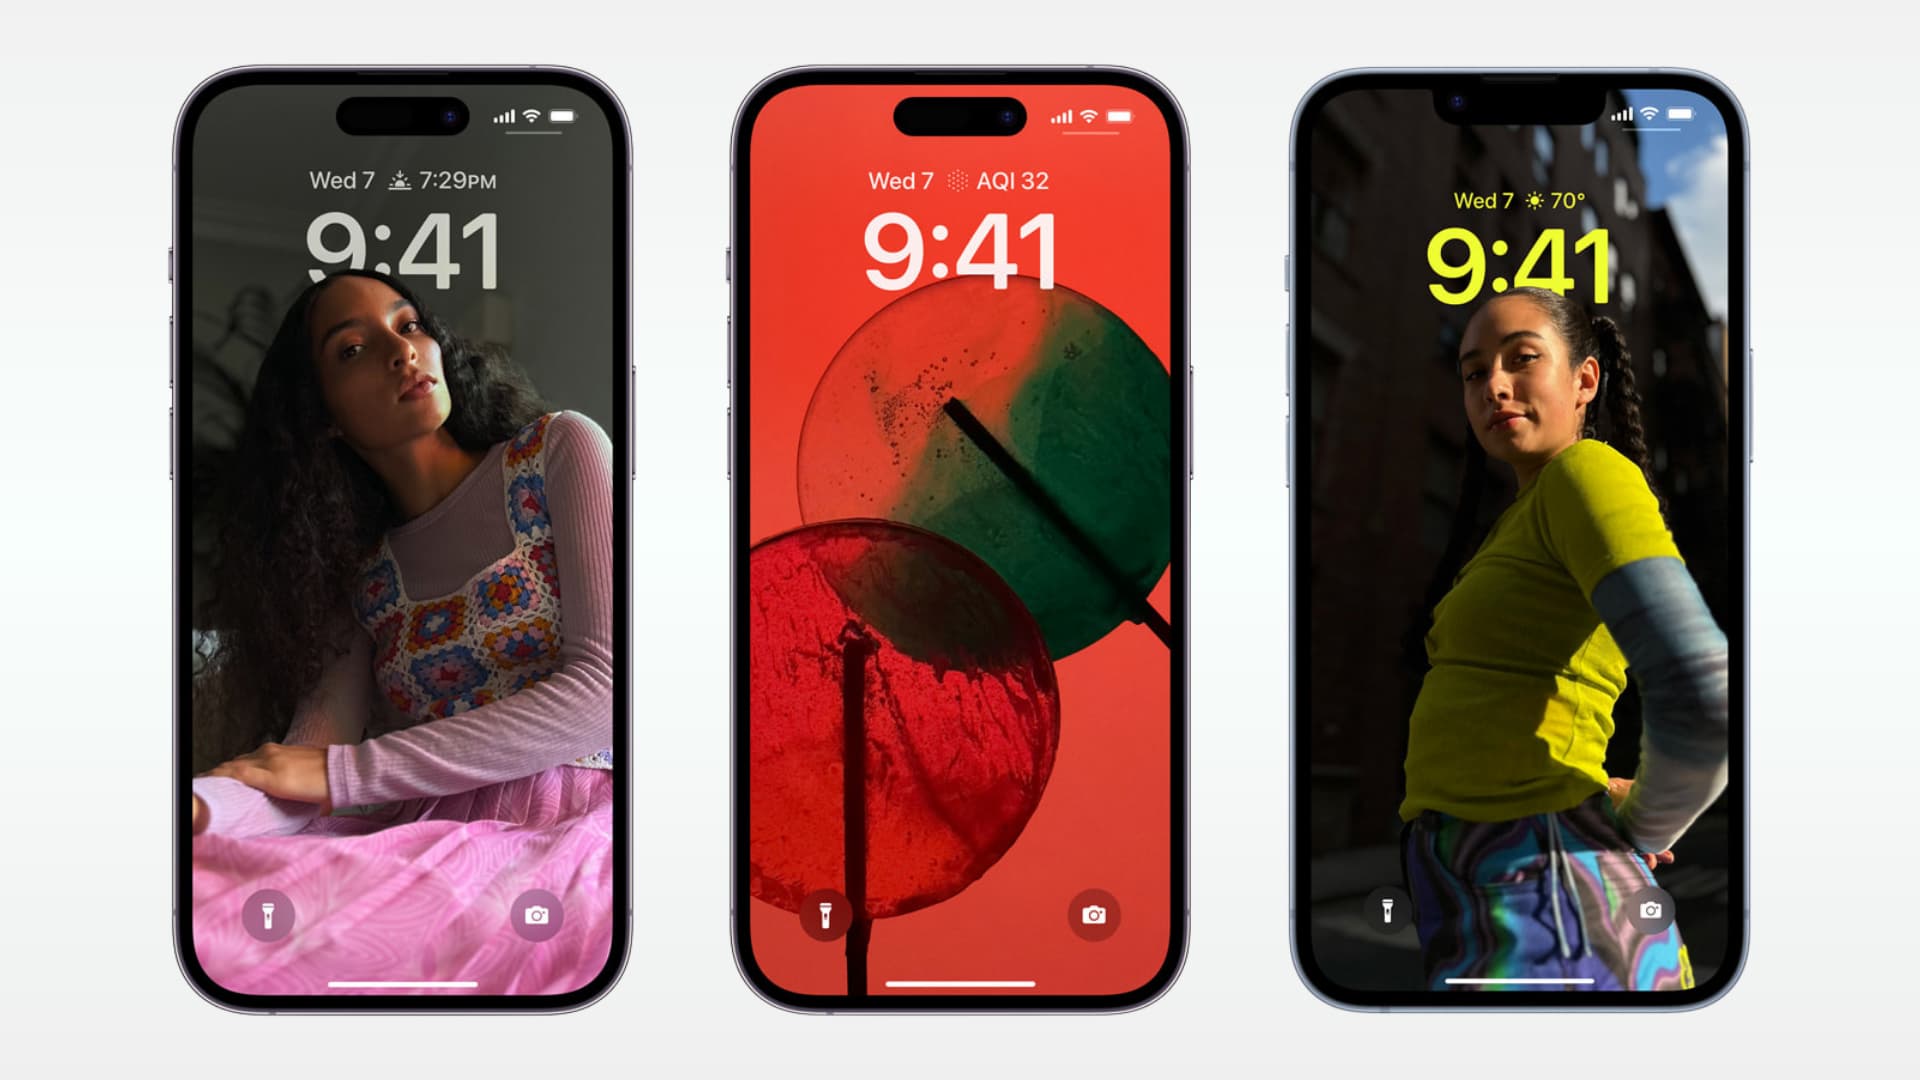 Three iPhone mockups showing the Lock Screen